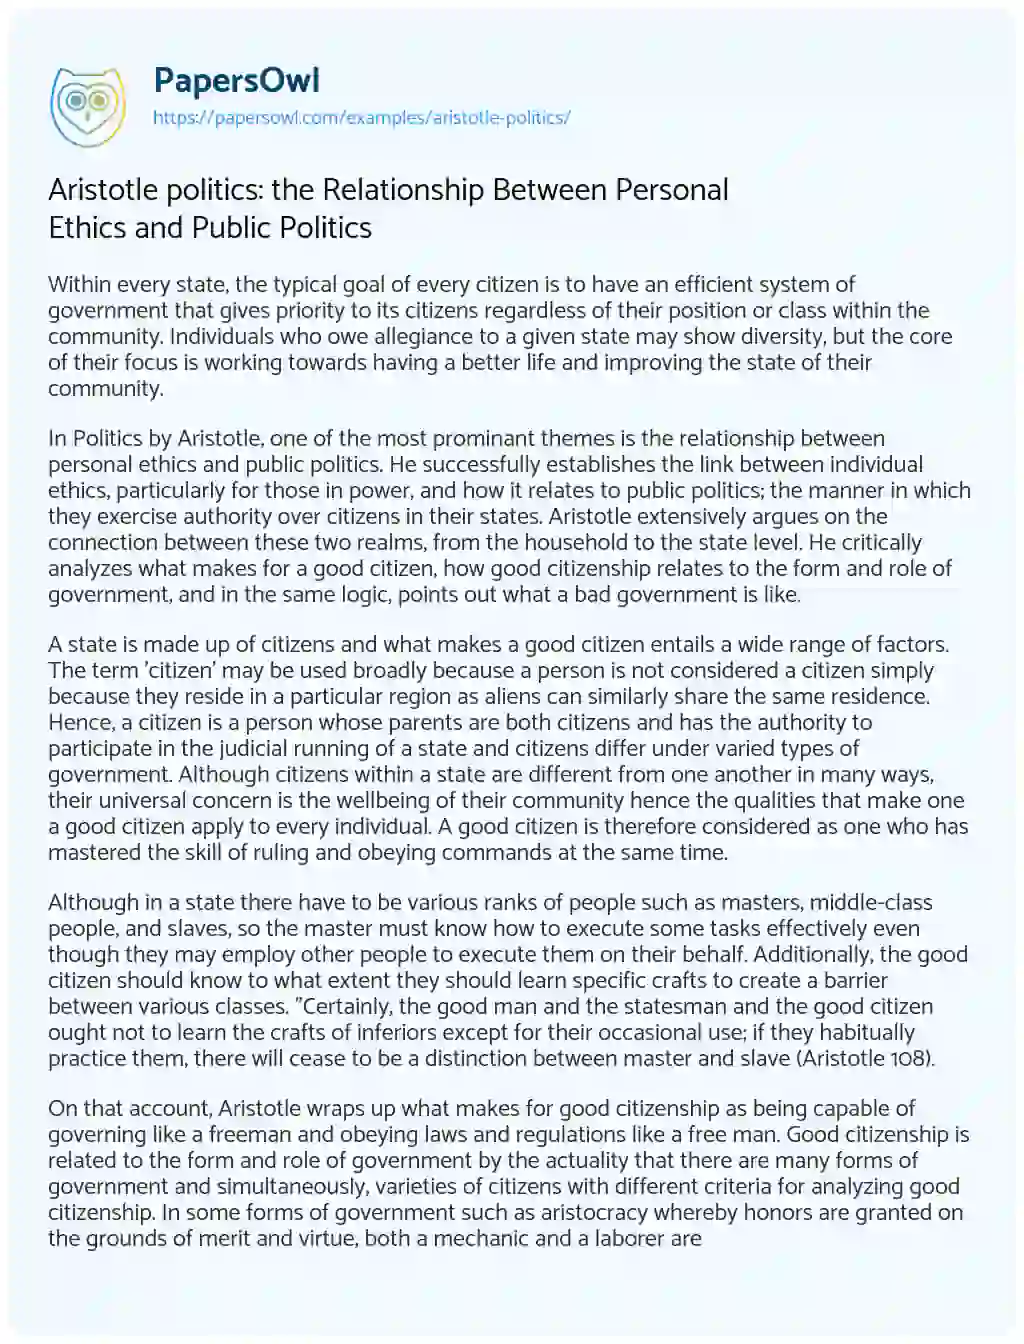 Essay on Aristotle Politics: the Relationship between Personal Ethics and Public Politics